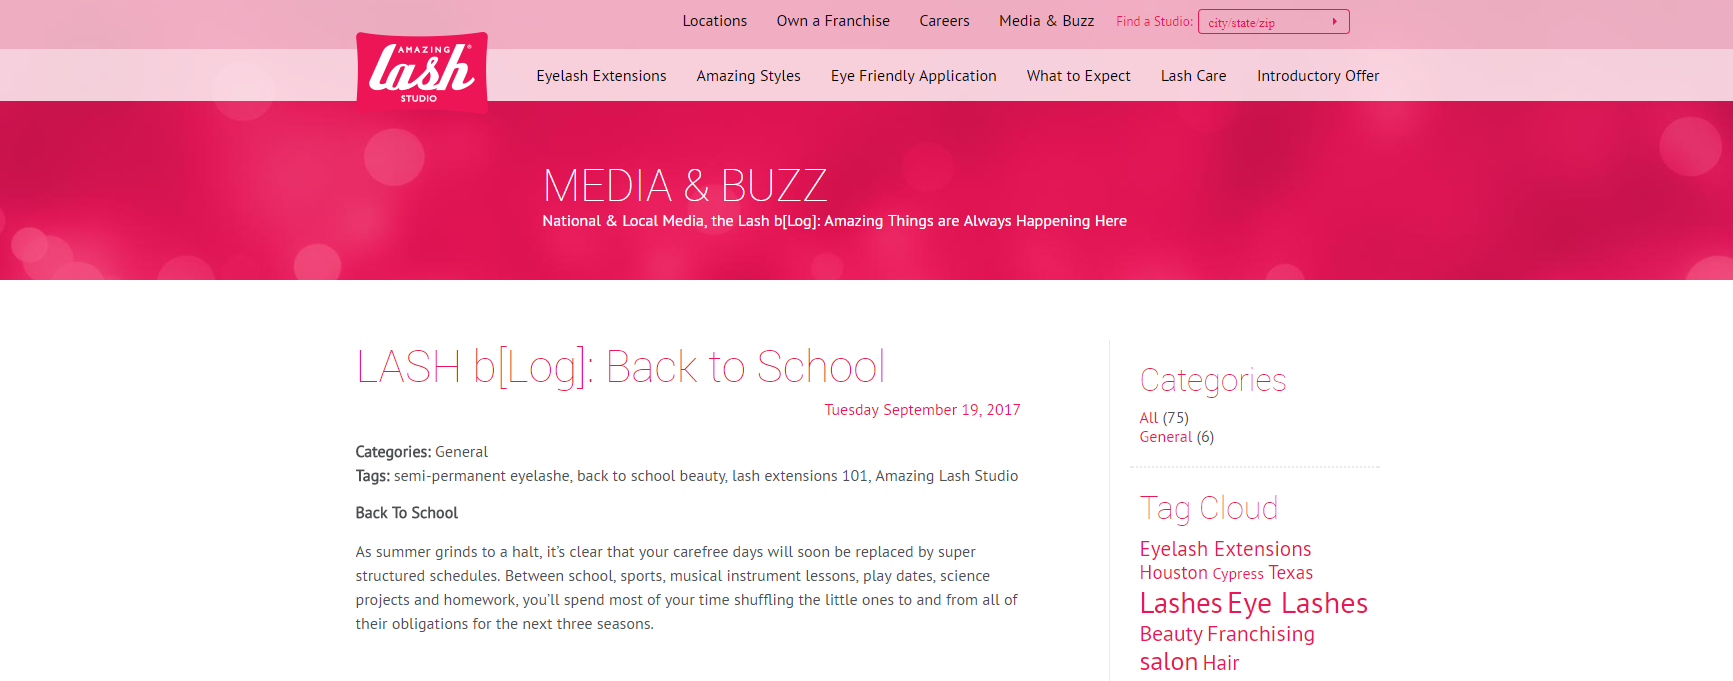 Lash blog, back to school